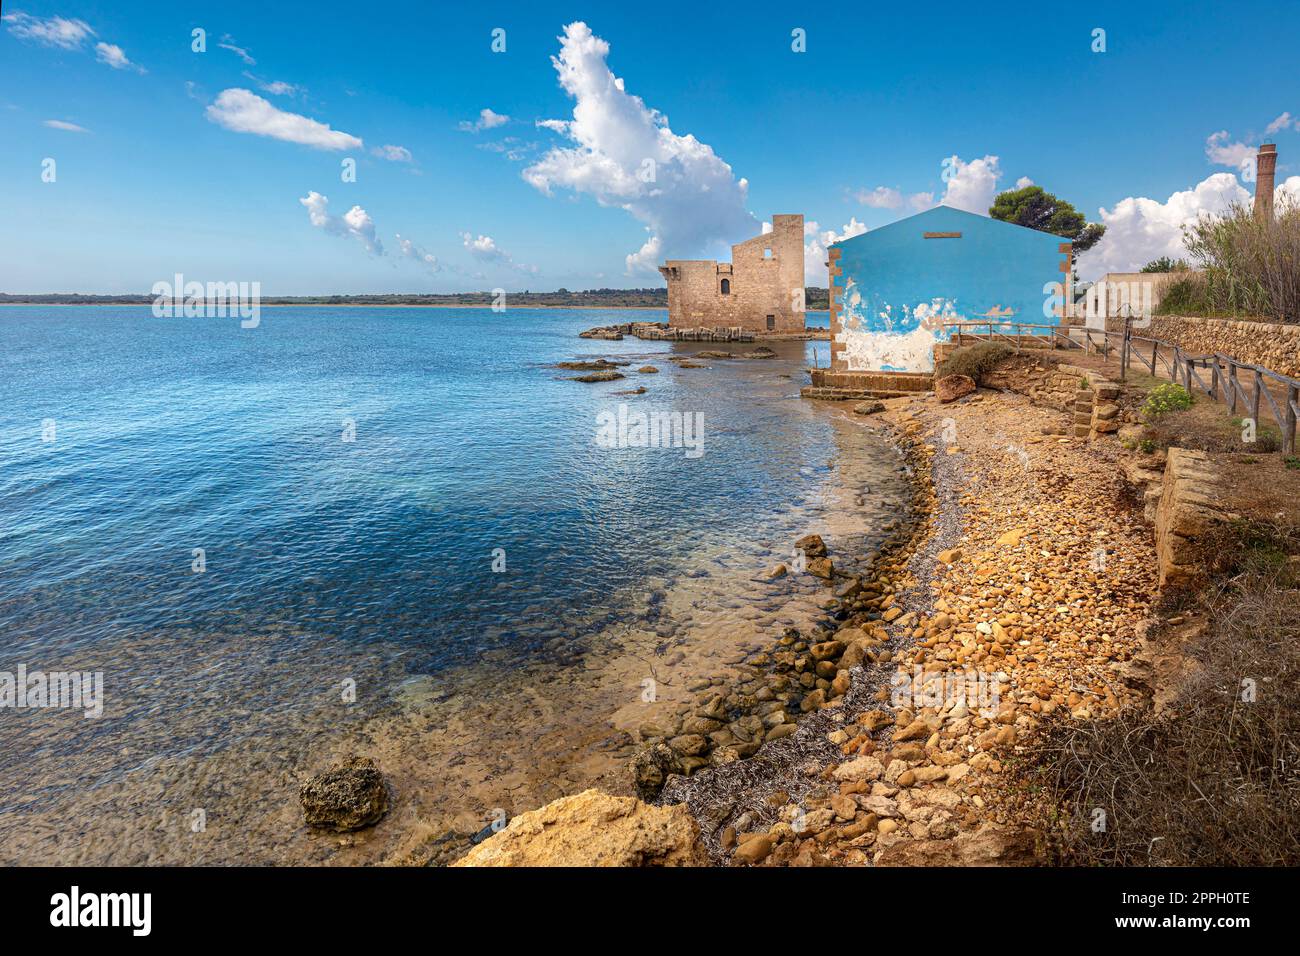 Location vendicari la tonnara on the island of Sicily. Stock Photo